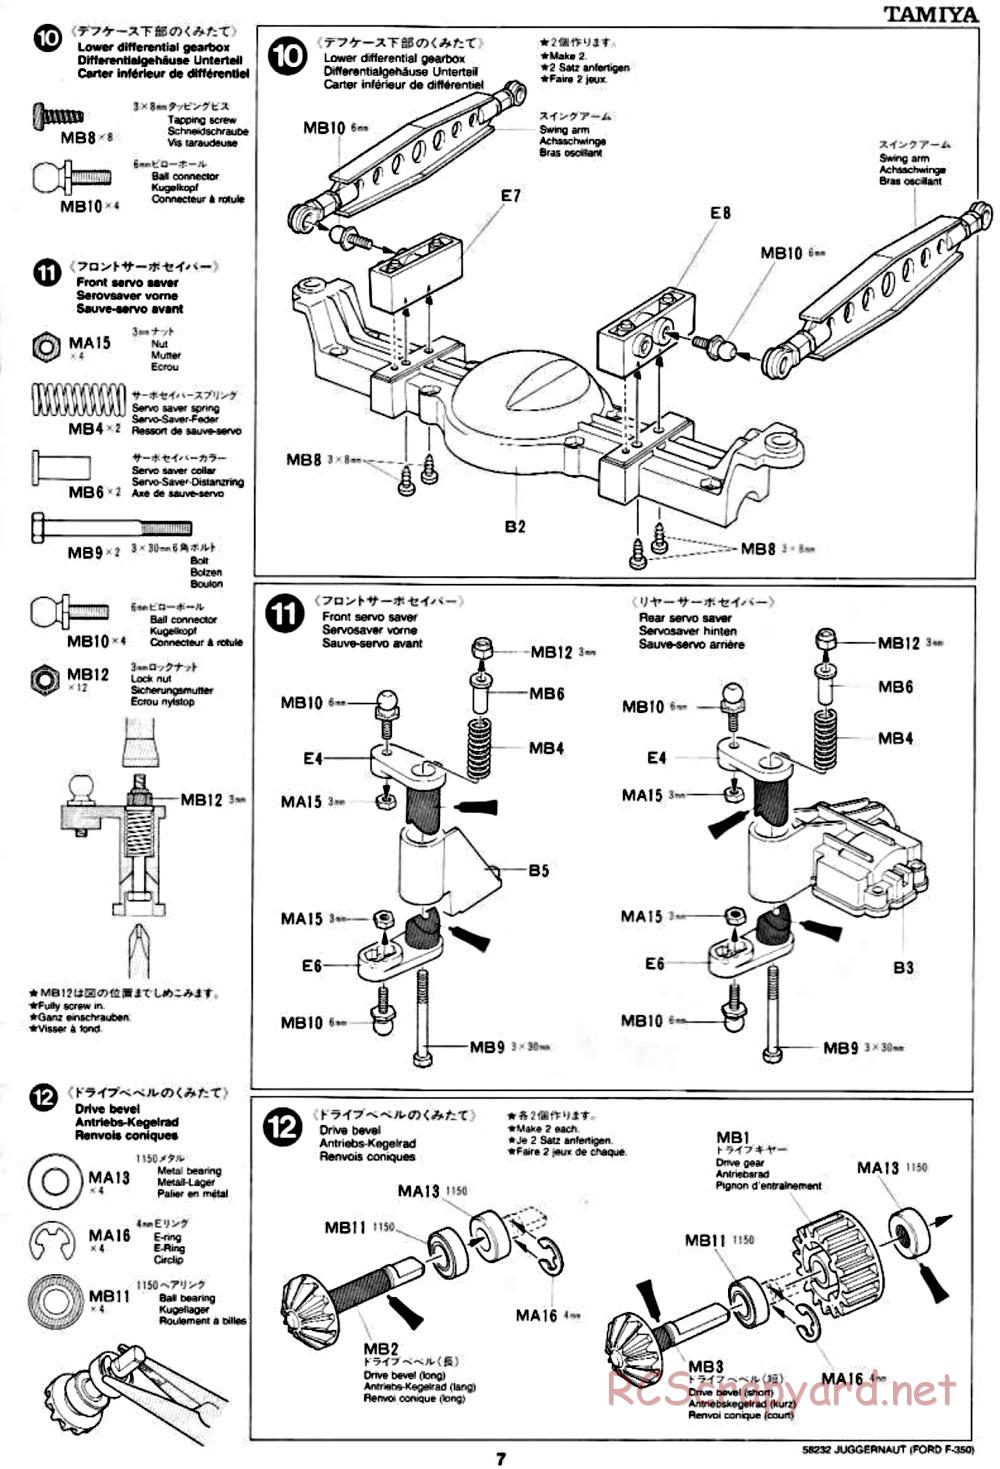 Tamiya - Juggernaut Chassis - Manual - Page 7